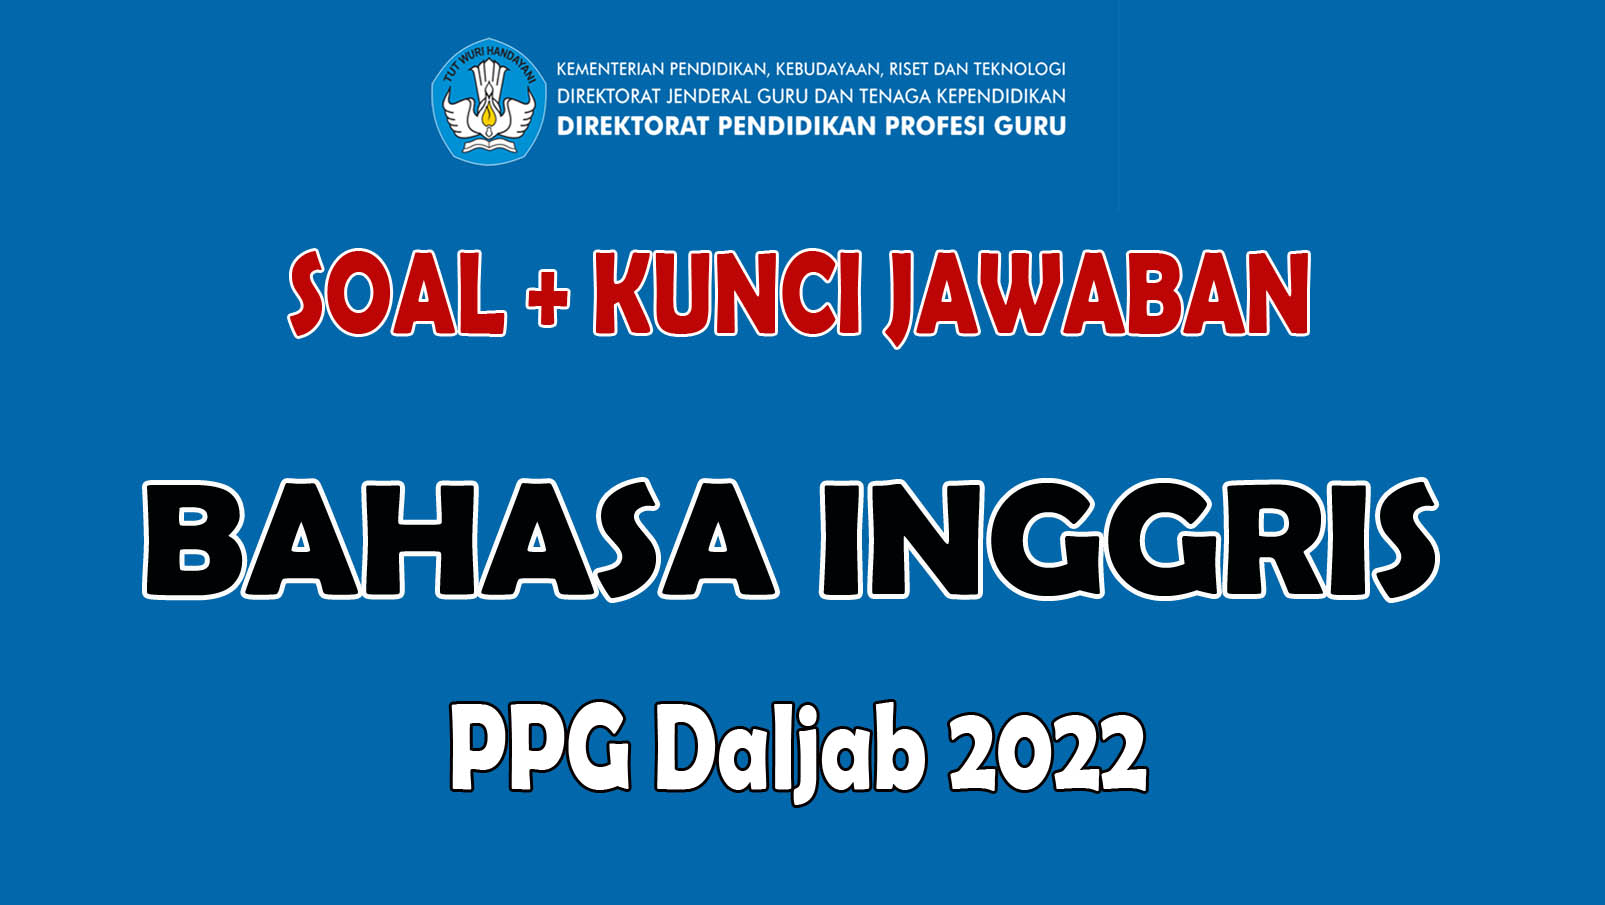 Terbaru Soal PPG Bahasa Inggris Daljab 2022 + Kunci Jawaban